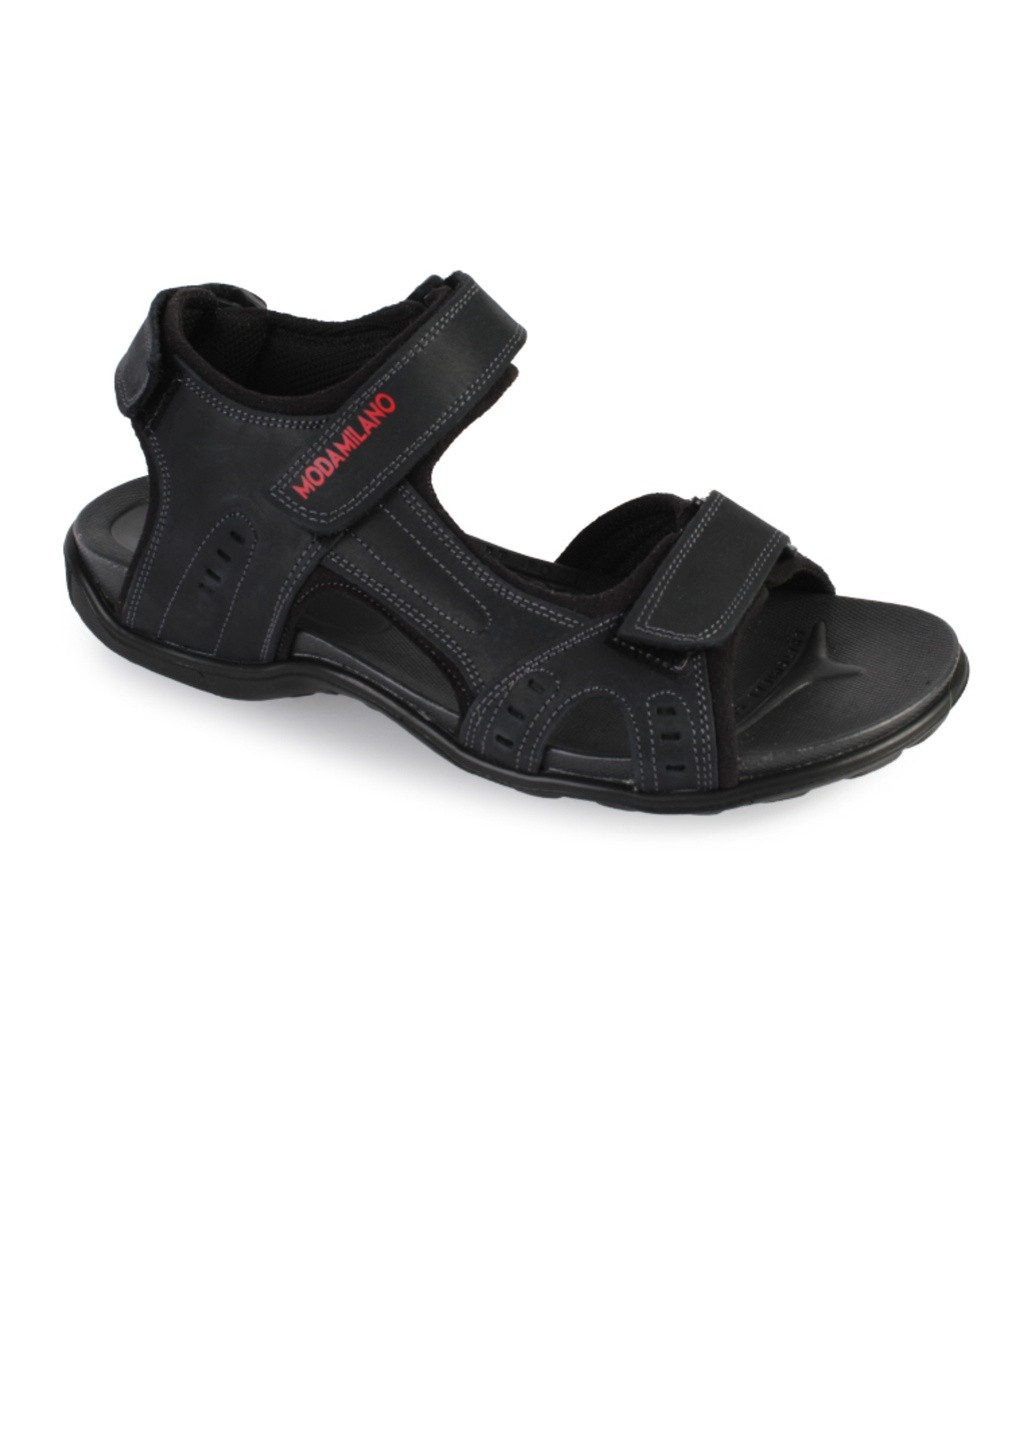 Спортивные сандалии мужские бренда 9301312_(2) One Way на липучке